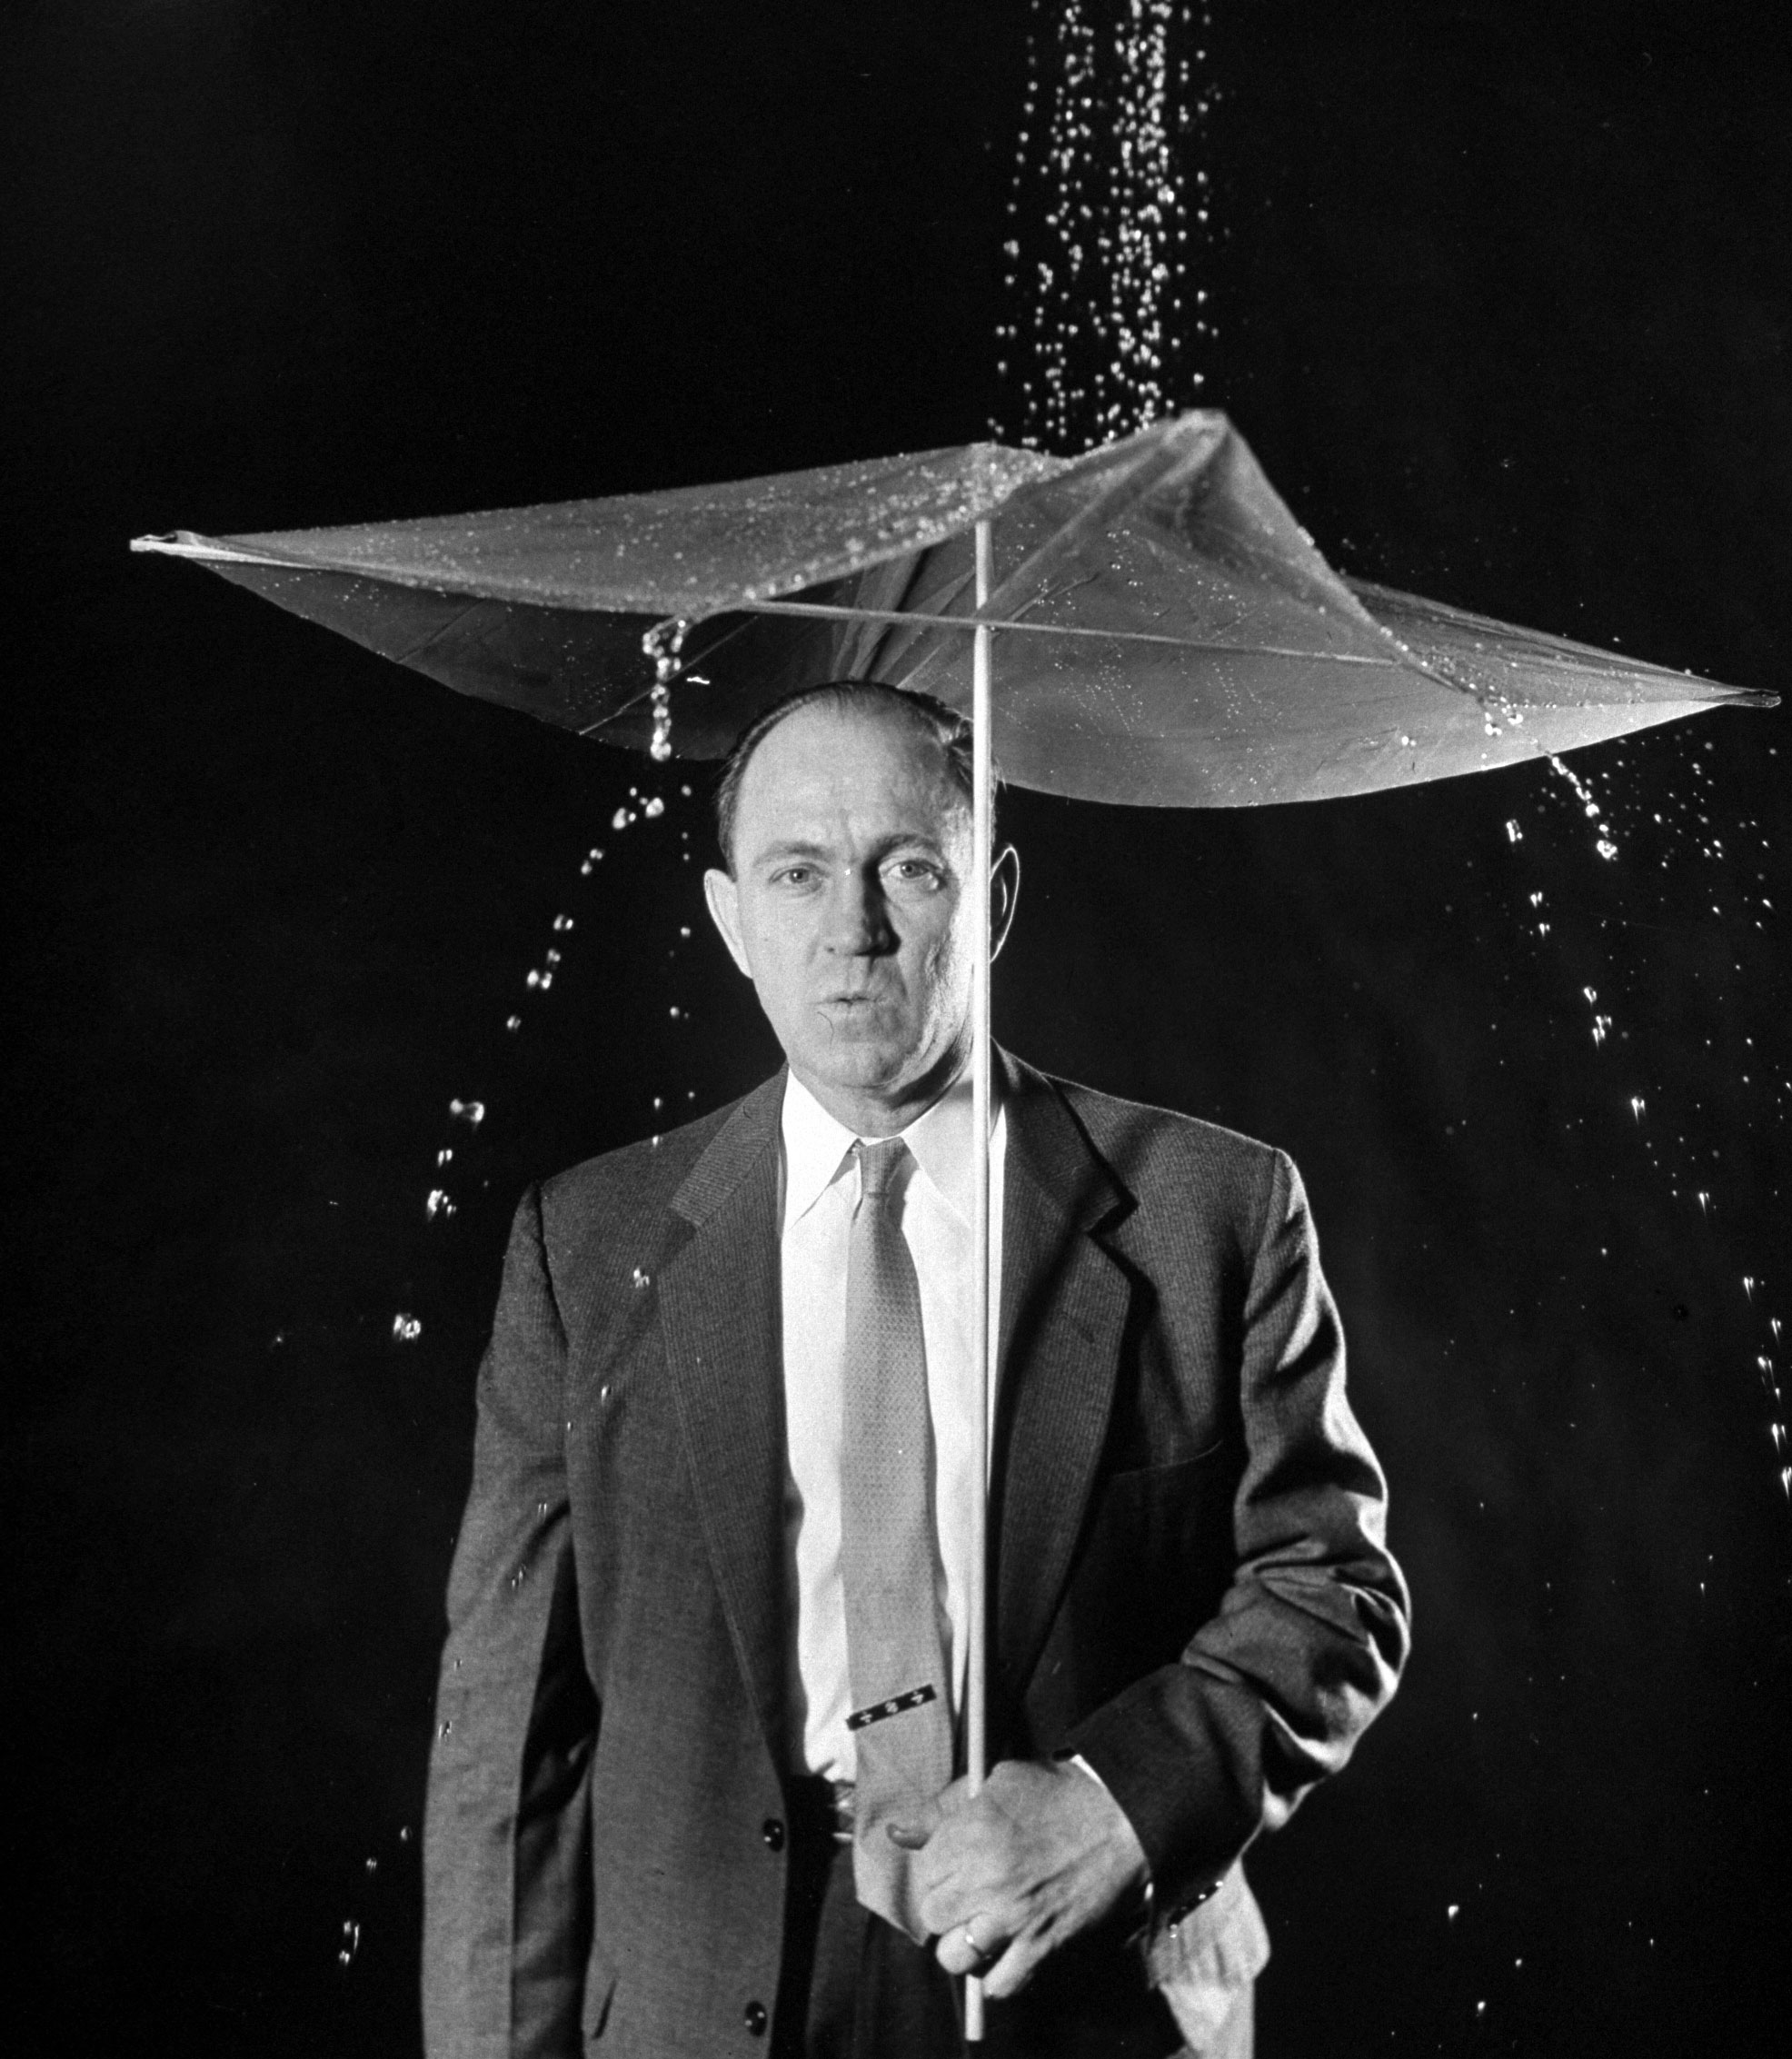 Gadget Invention Show, 1958